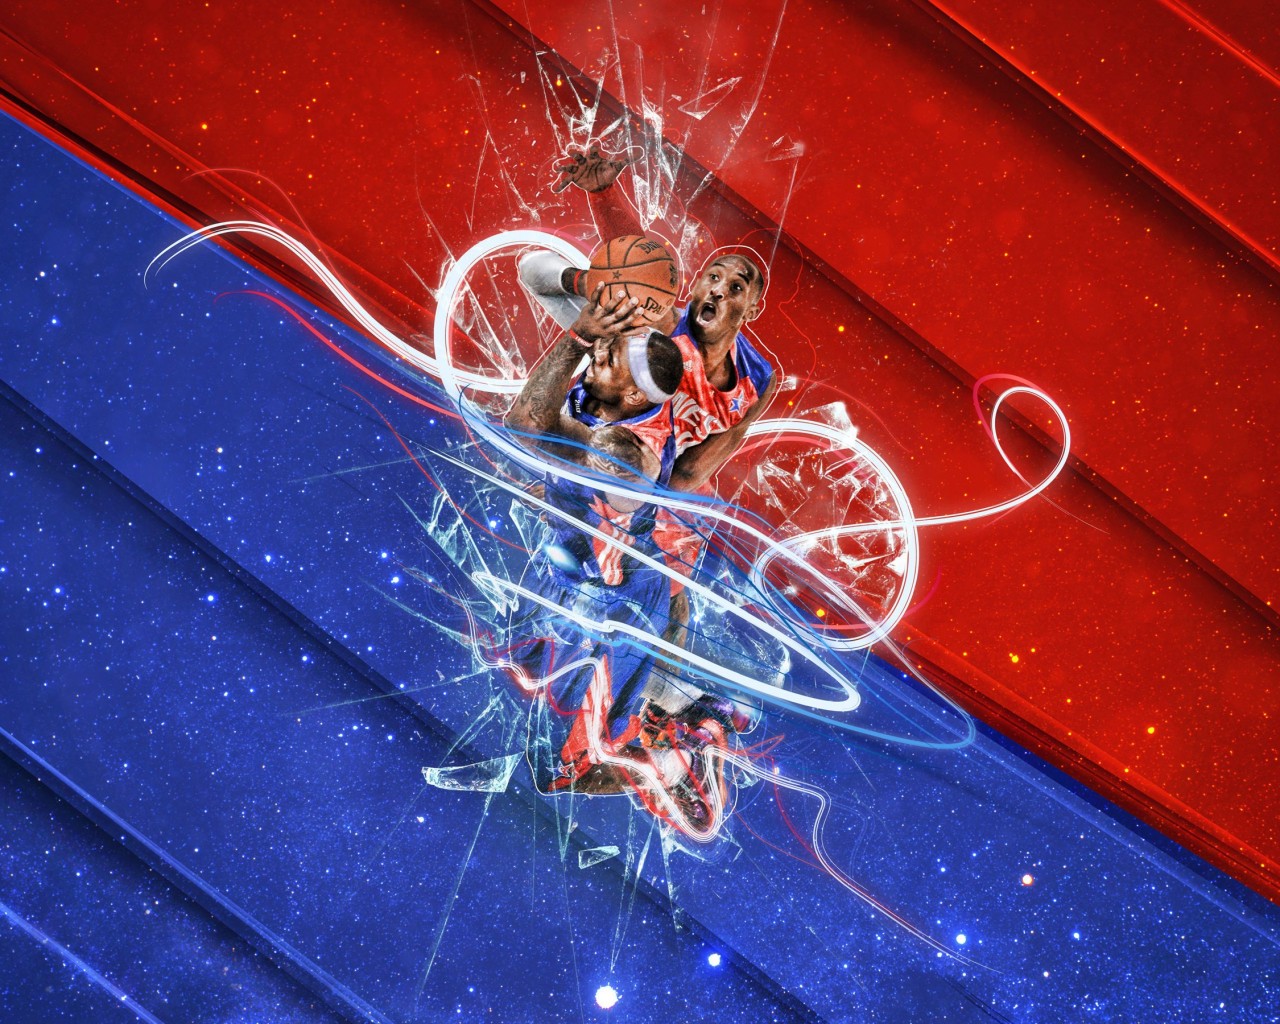 LeBron James Vs Kobe Bryant - NBA - Basketball Wallpaper for Desktop 1280x1024